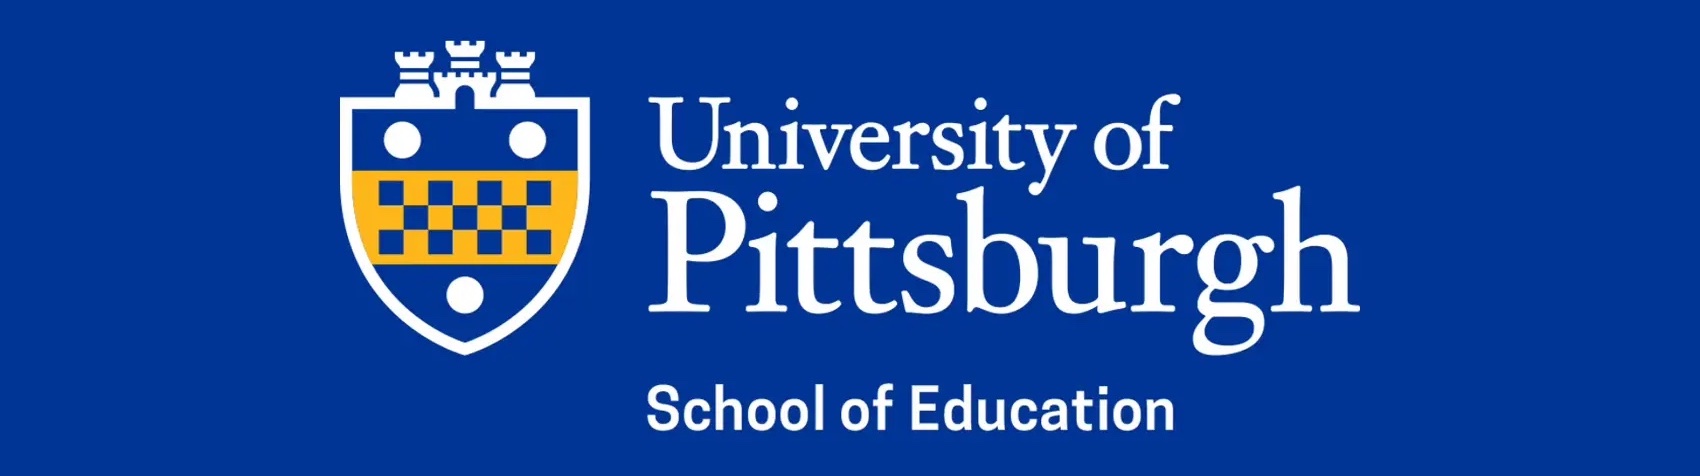 University of Pittsburgh banner